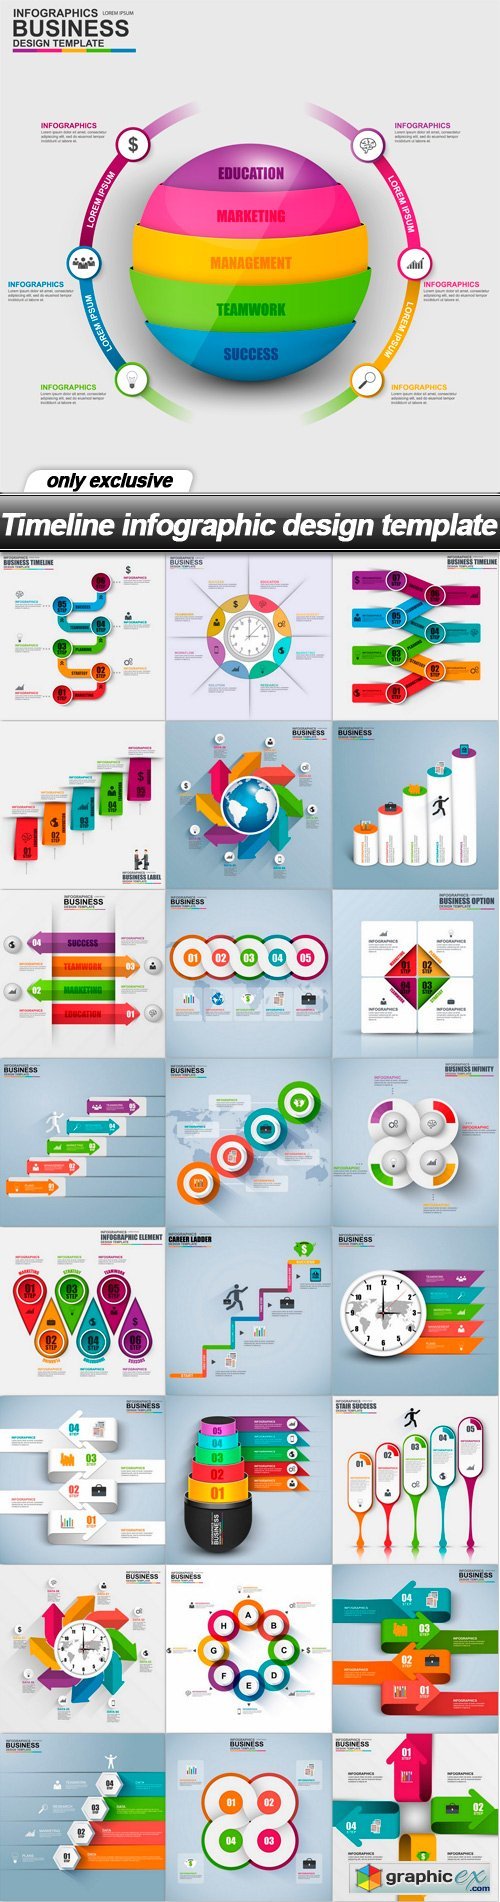 Timeline infographic design template - 25 EPS